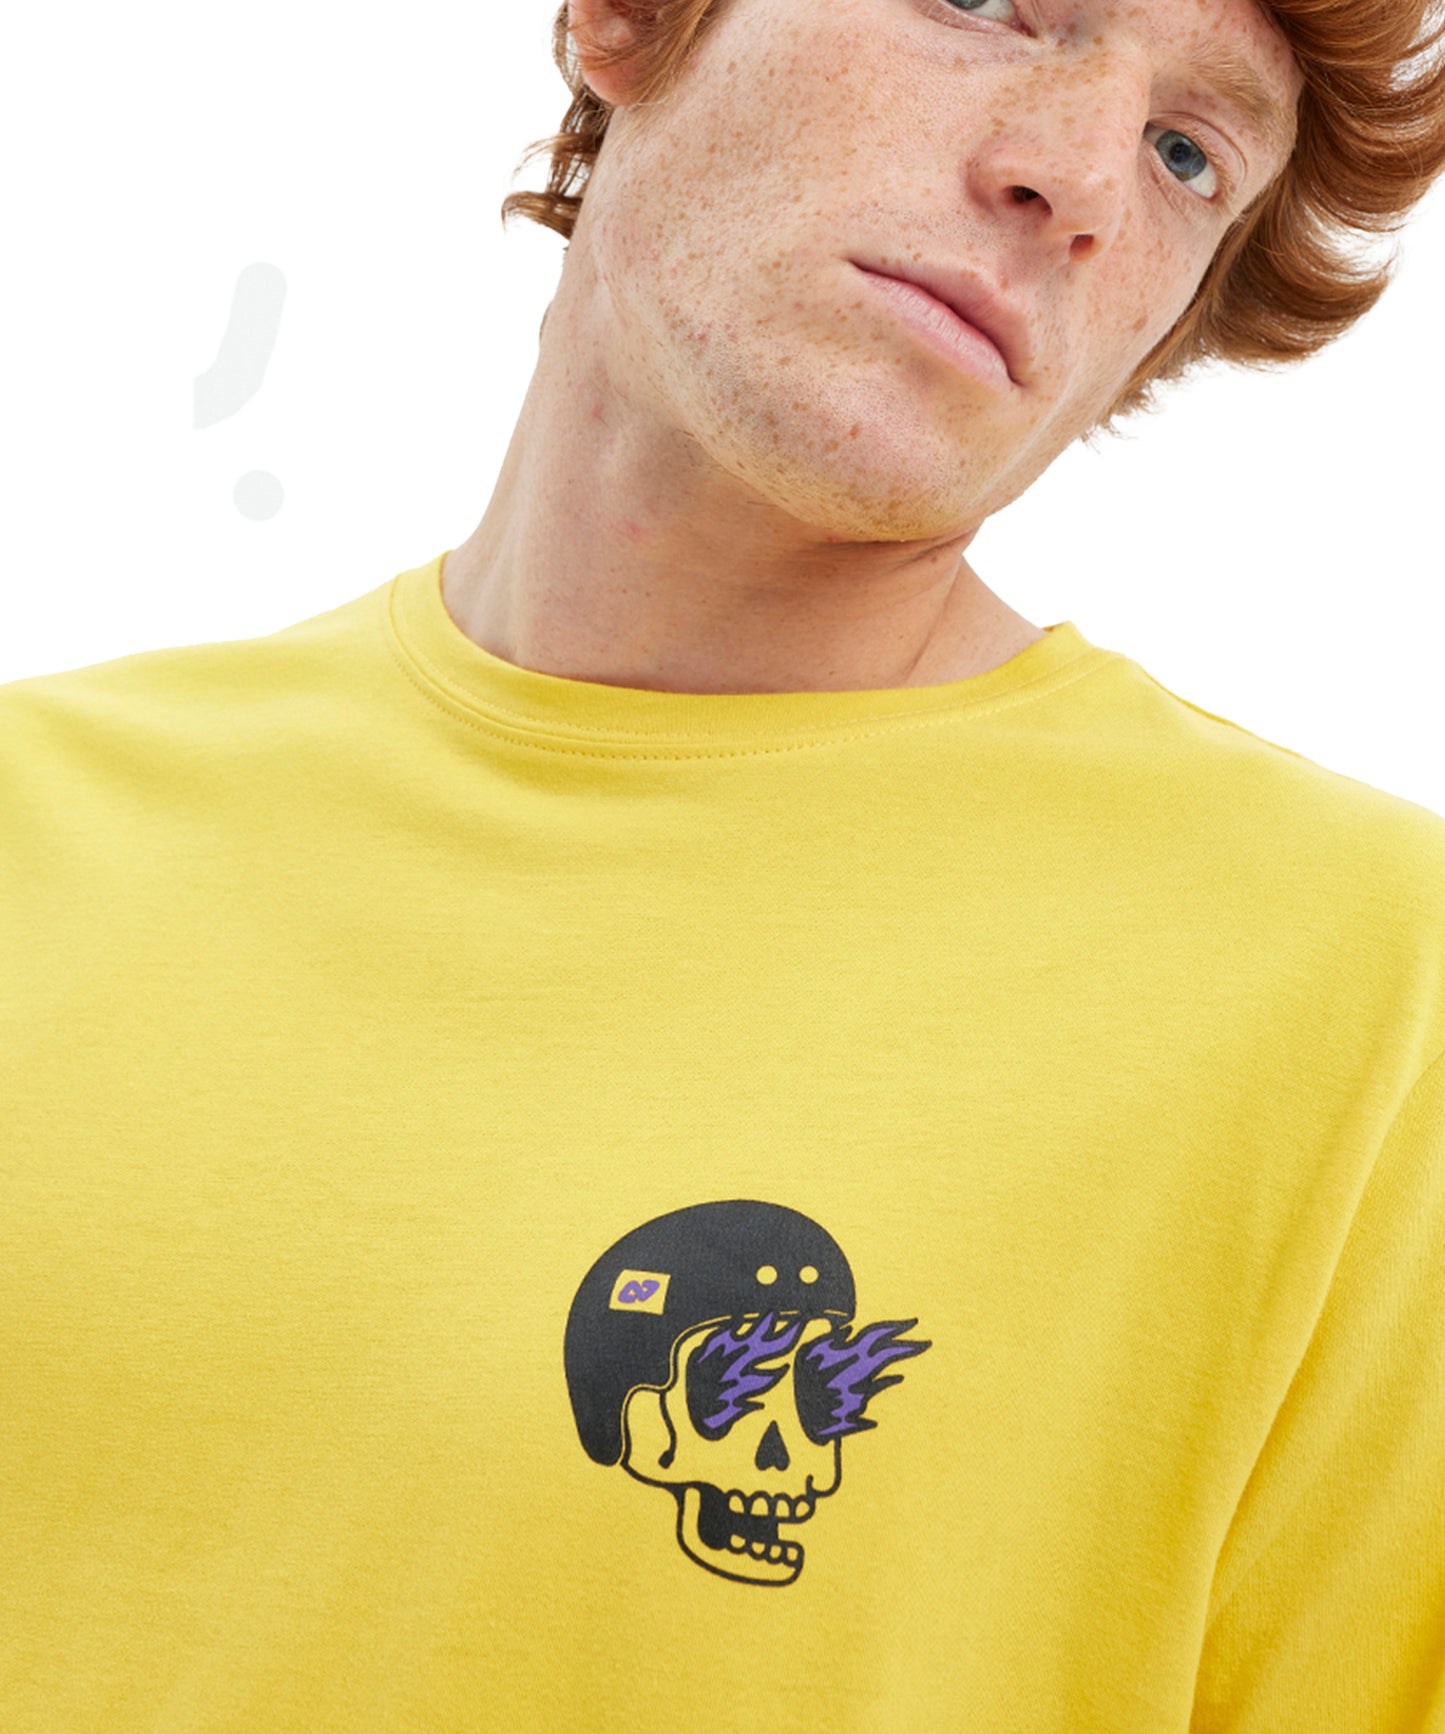 camiseta-manga-corta-hydroponic-pushing-yellow-color-amarillo-serigrafia-grande-en-la-espalda-algodón-100%.